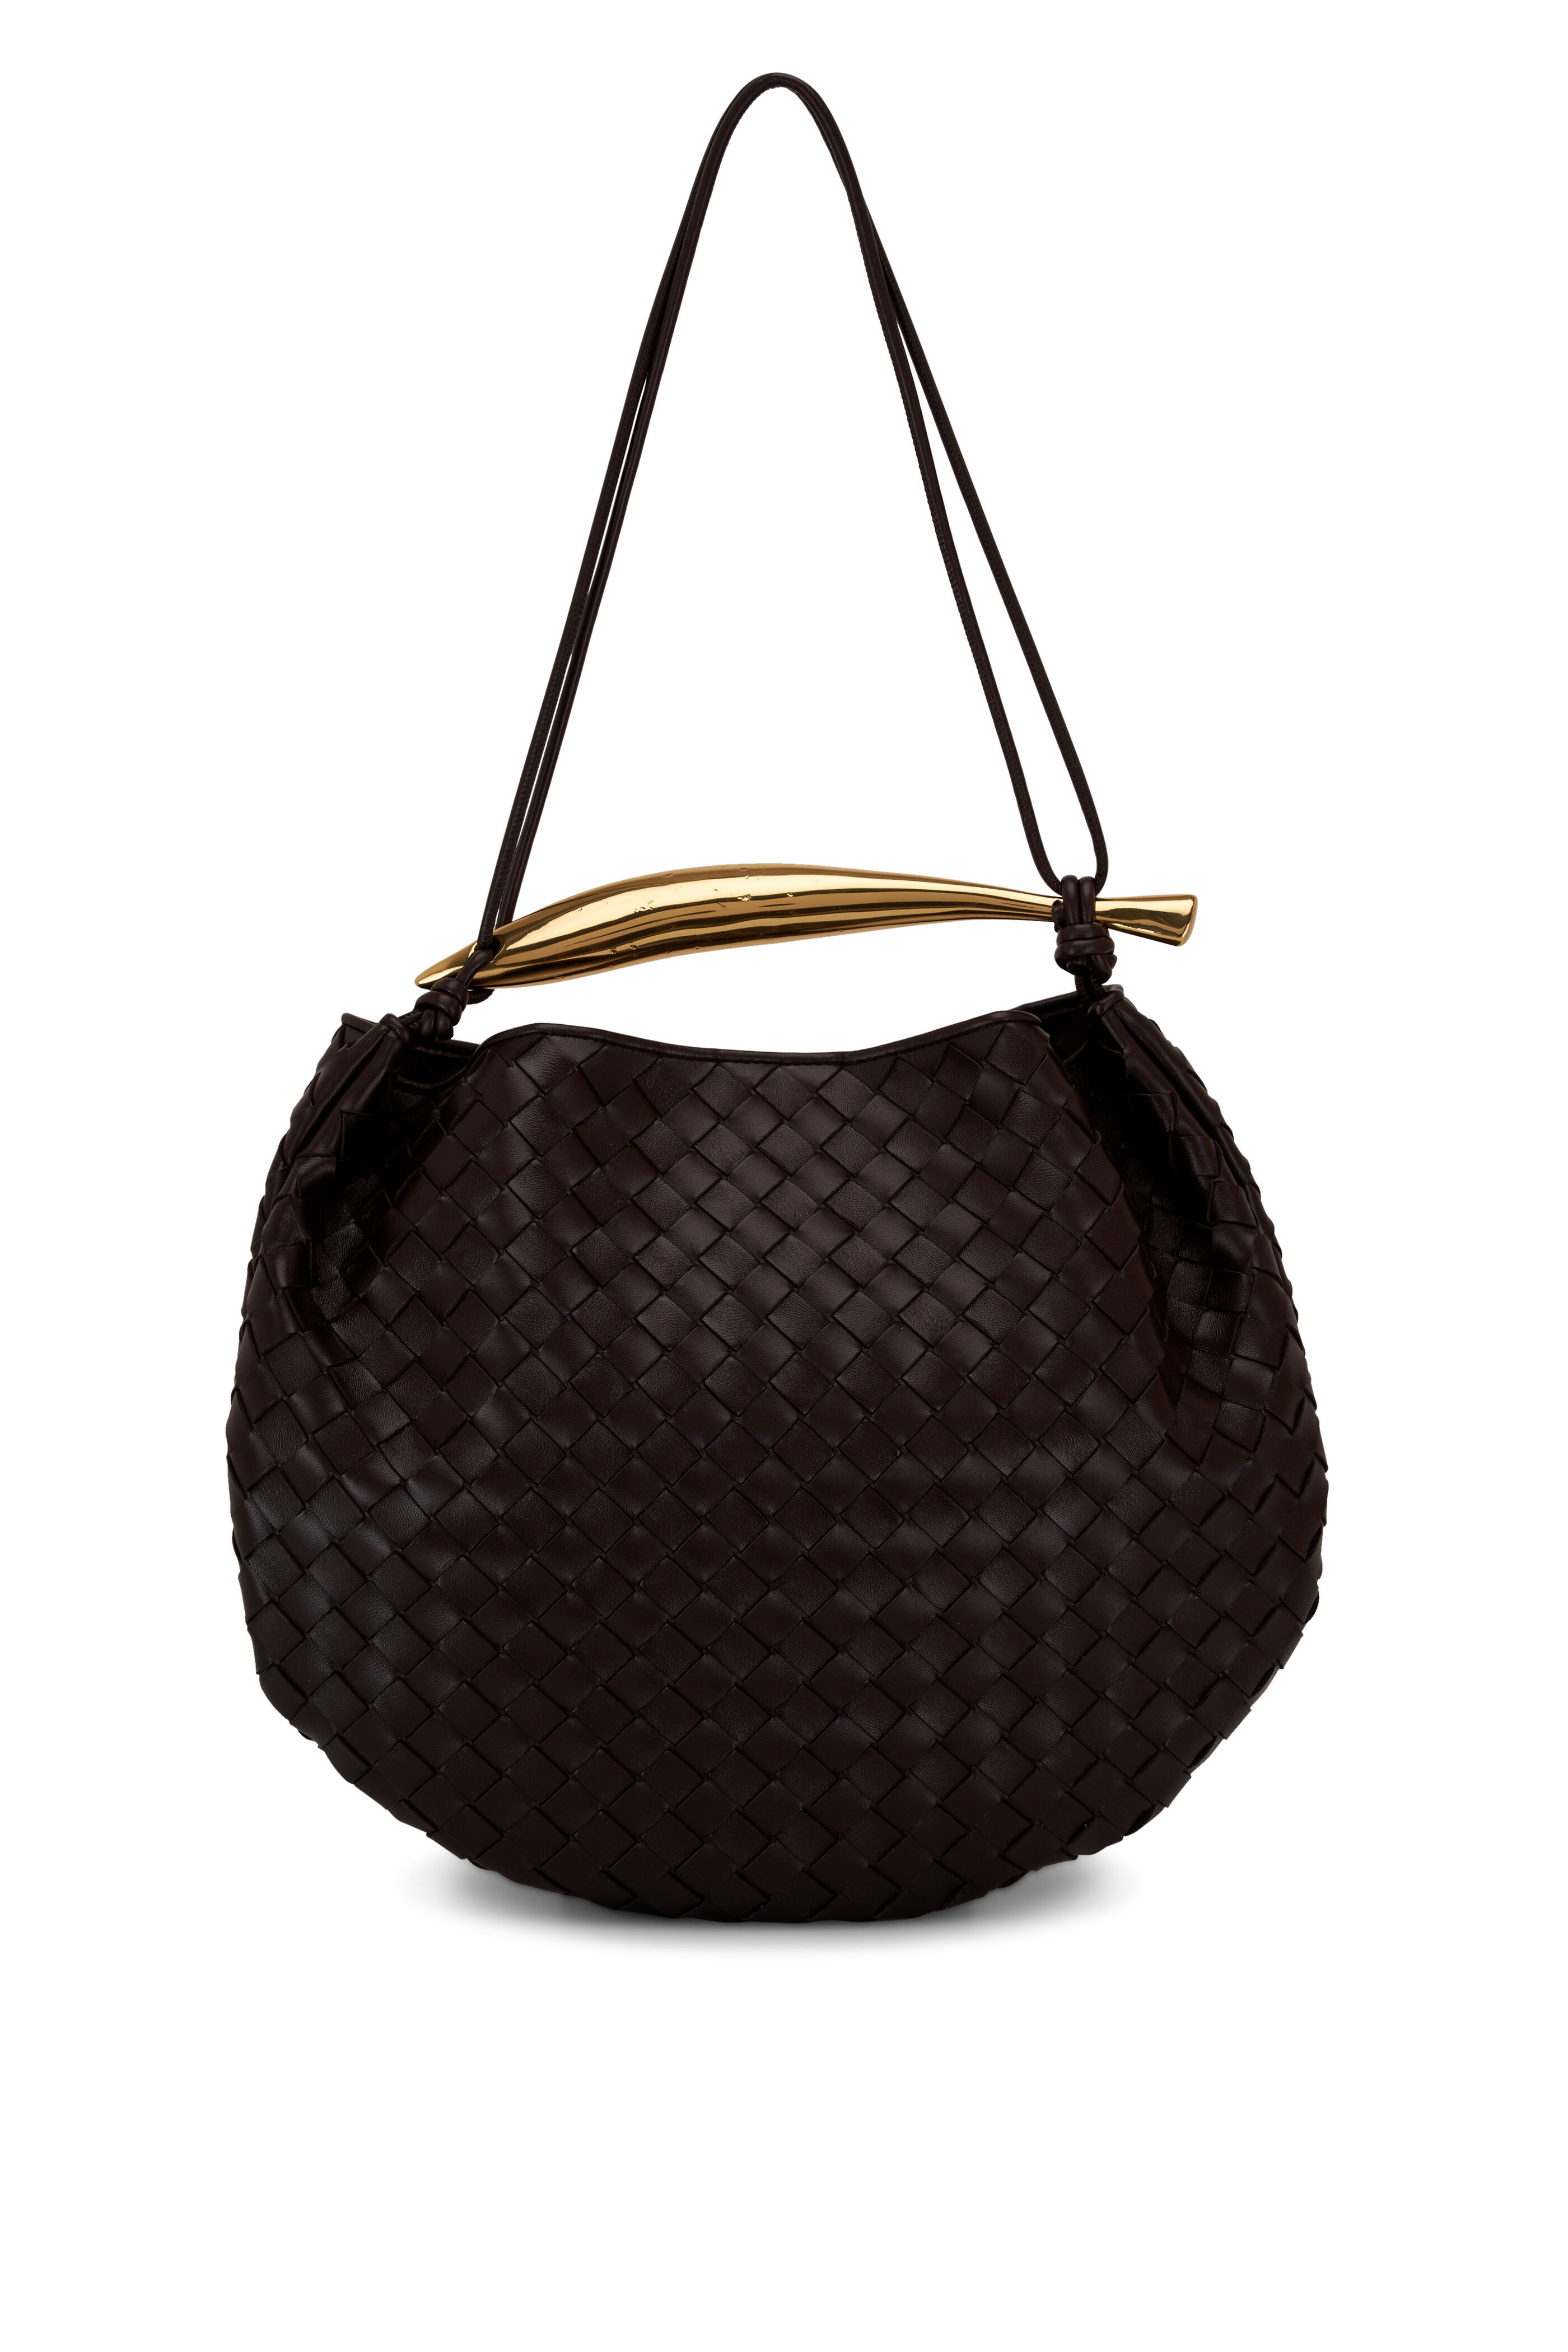 BOTTEGA VENETA, Intreccio padded leather mini hobo bag, Women